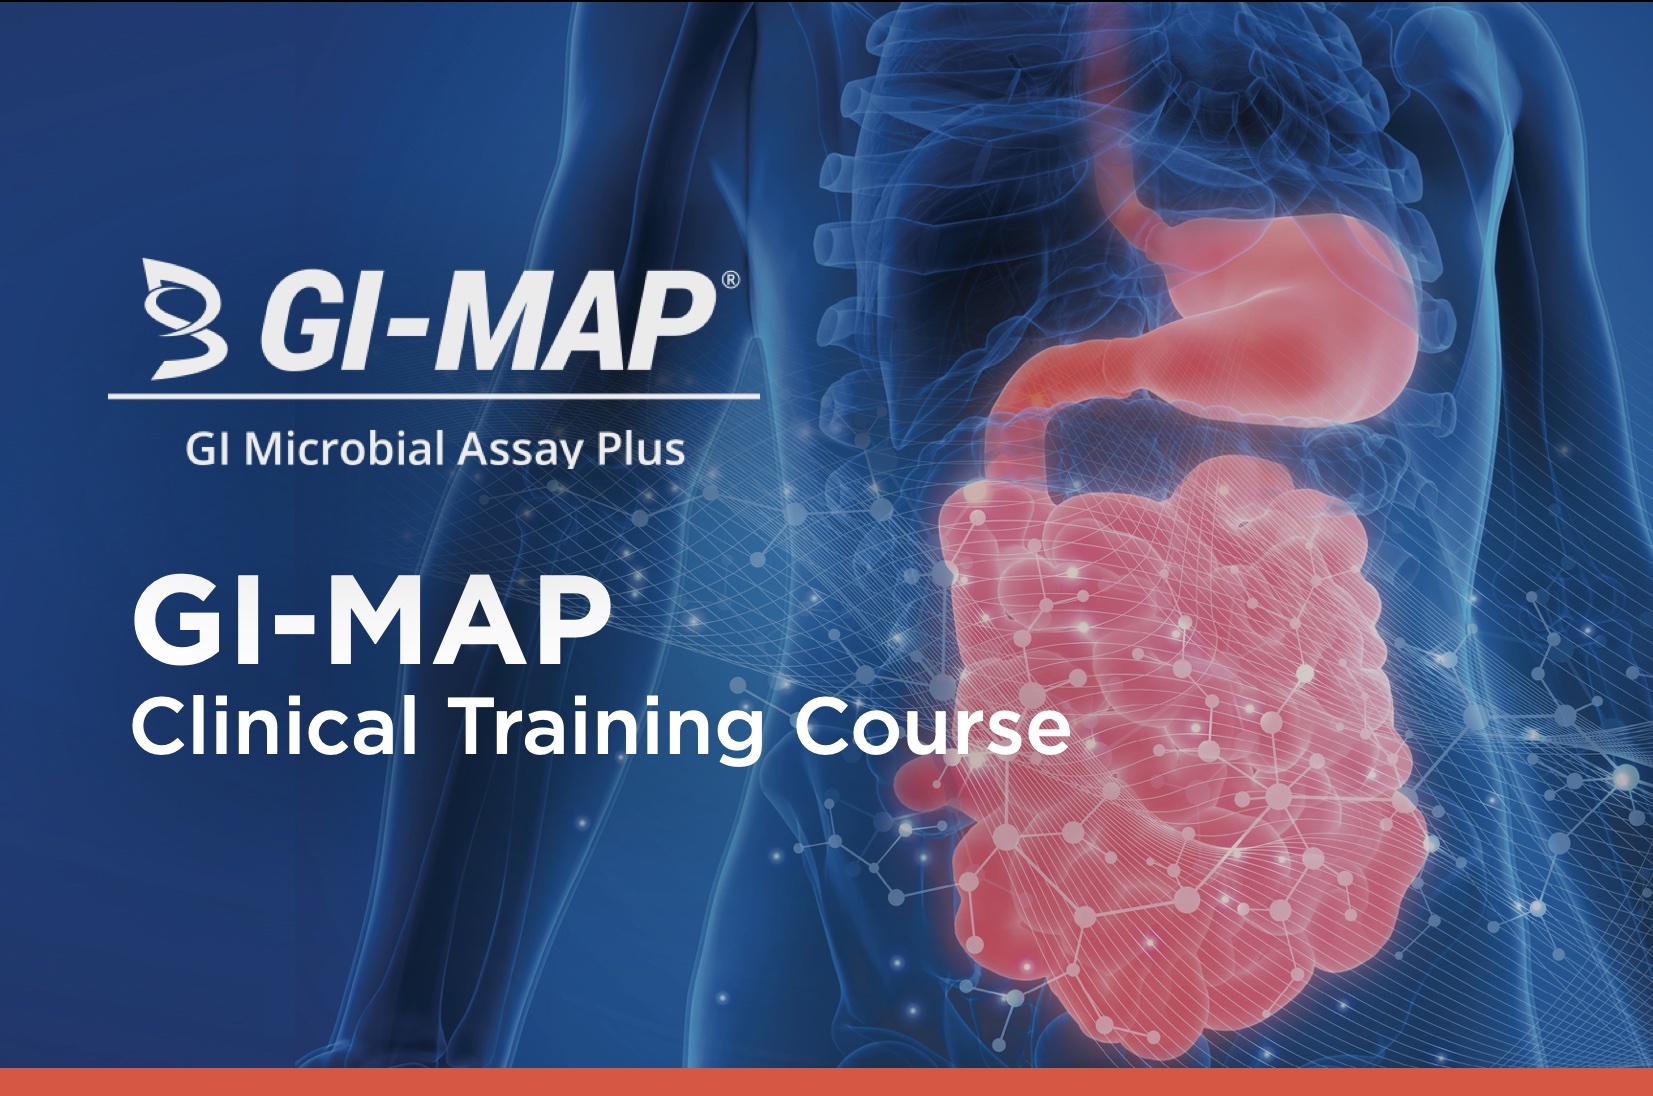 GI-MAP Training Course